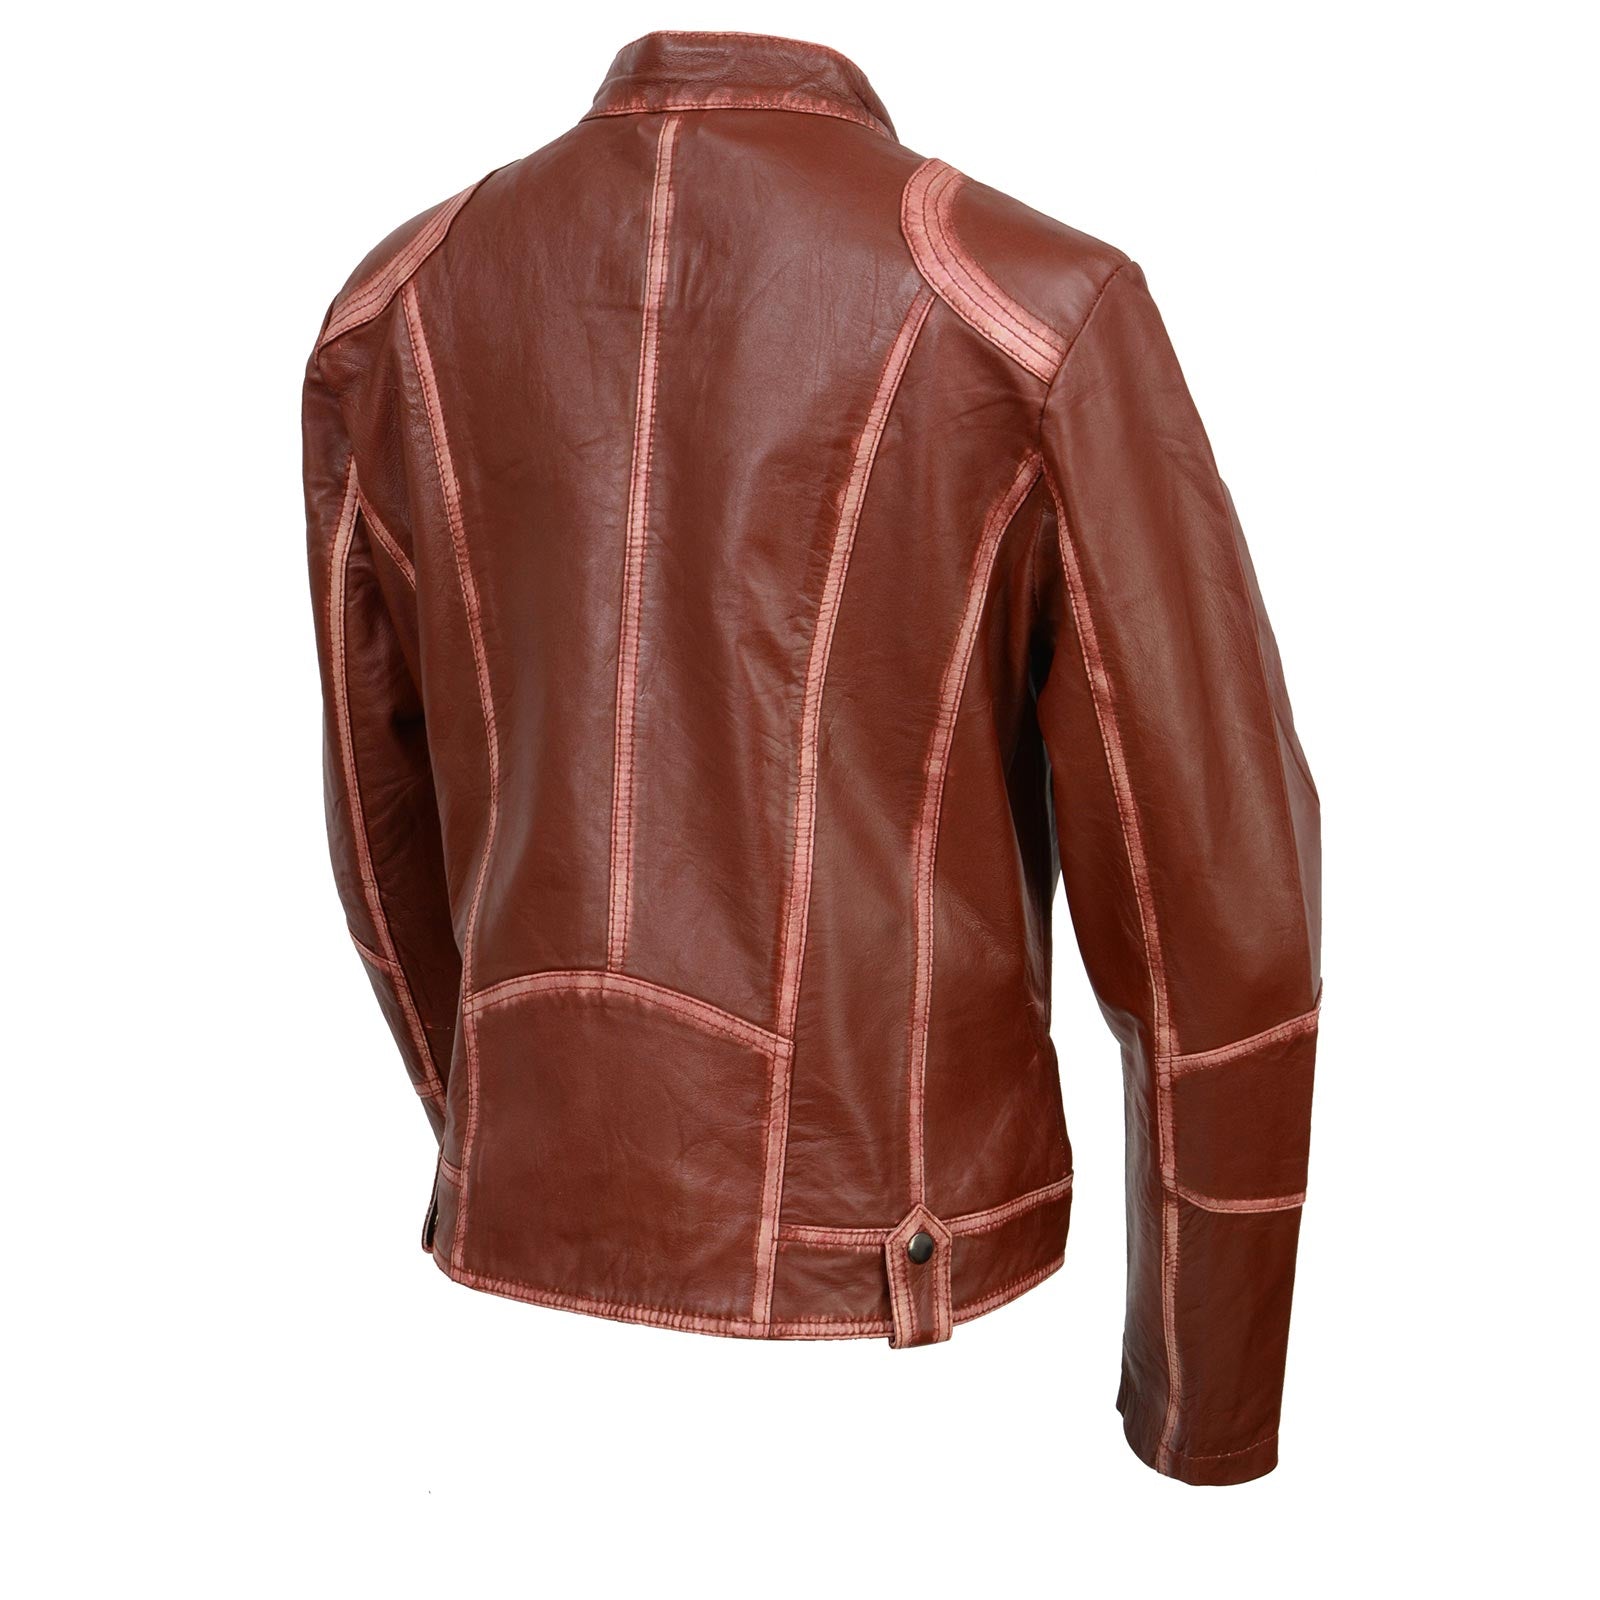 Buy Milwaukee Leather Women's Sheepskin Scuba Style Moto Jacket